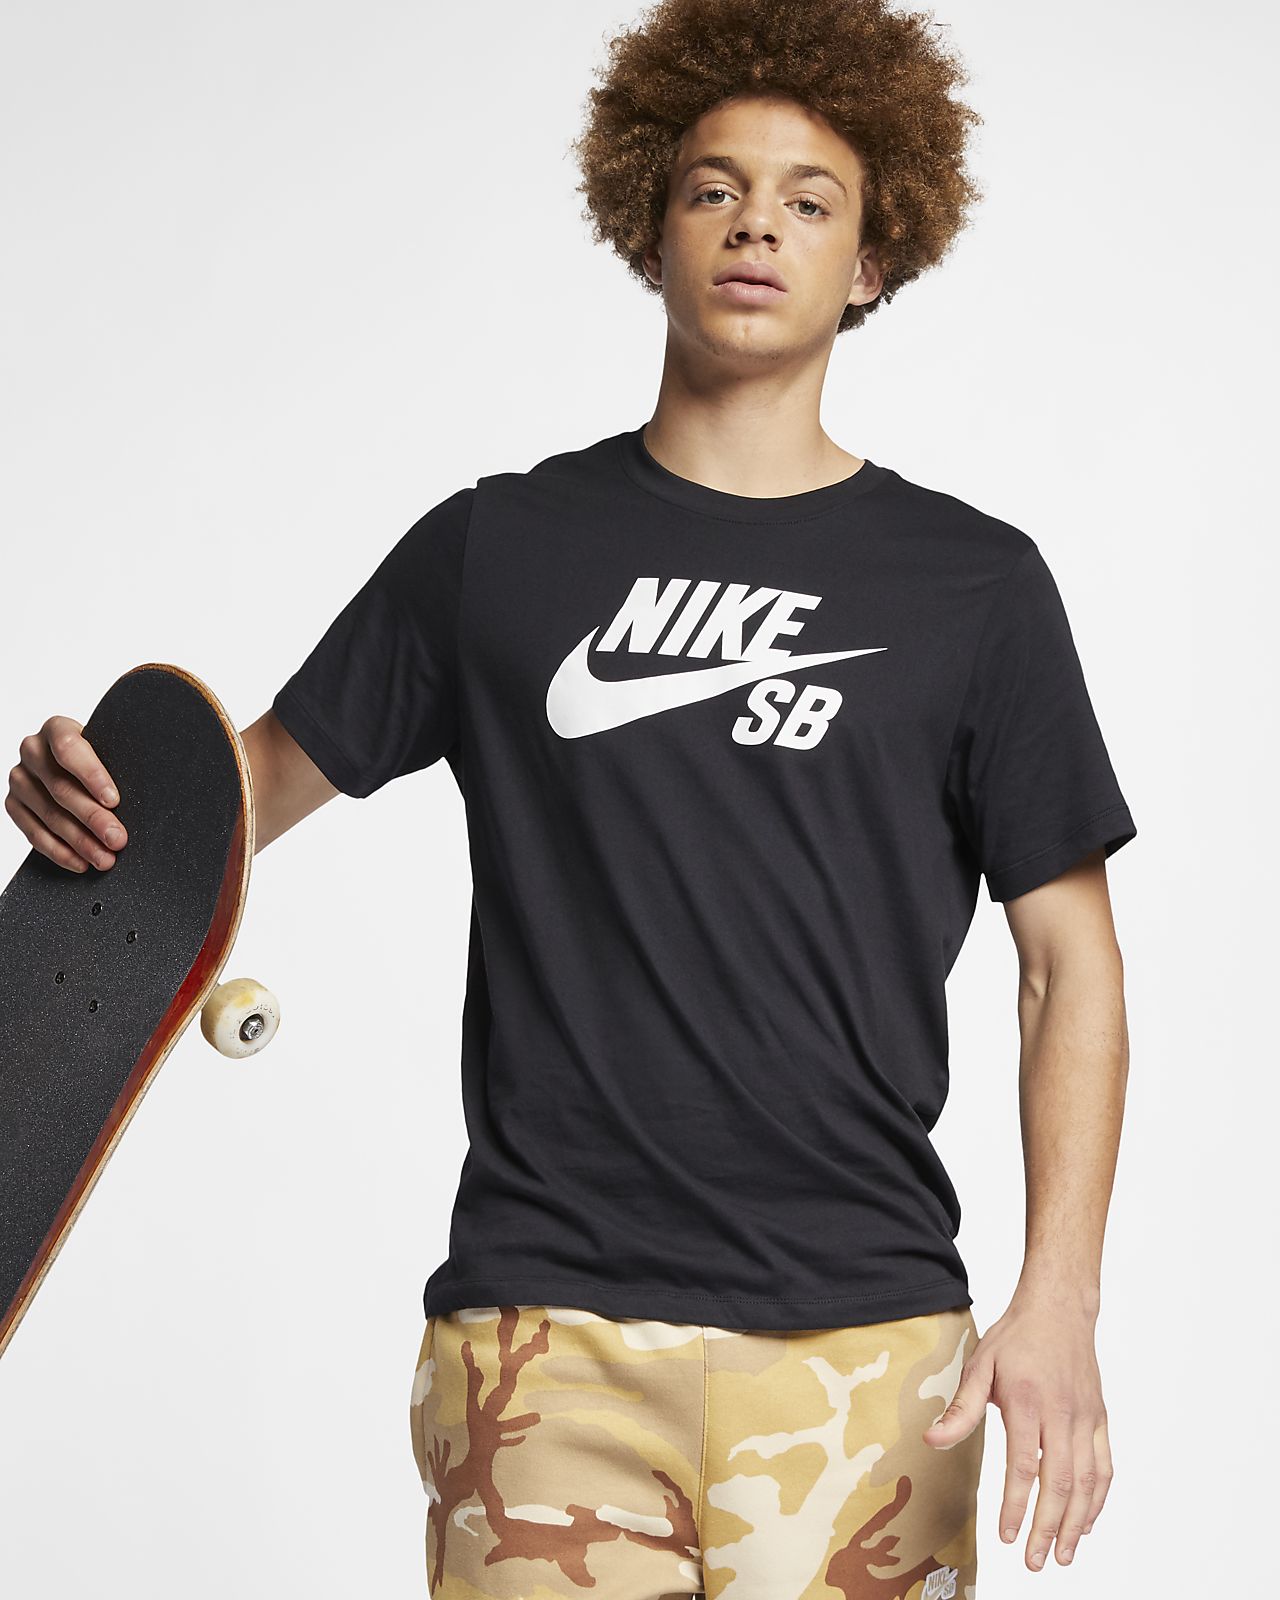 Nike Official Nike Sb Dri Fit Men S Skate T Shirt Online Store